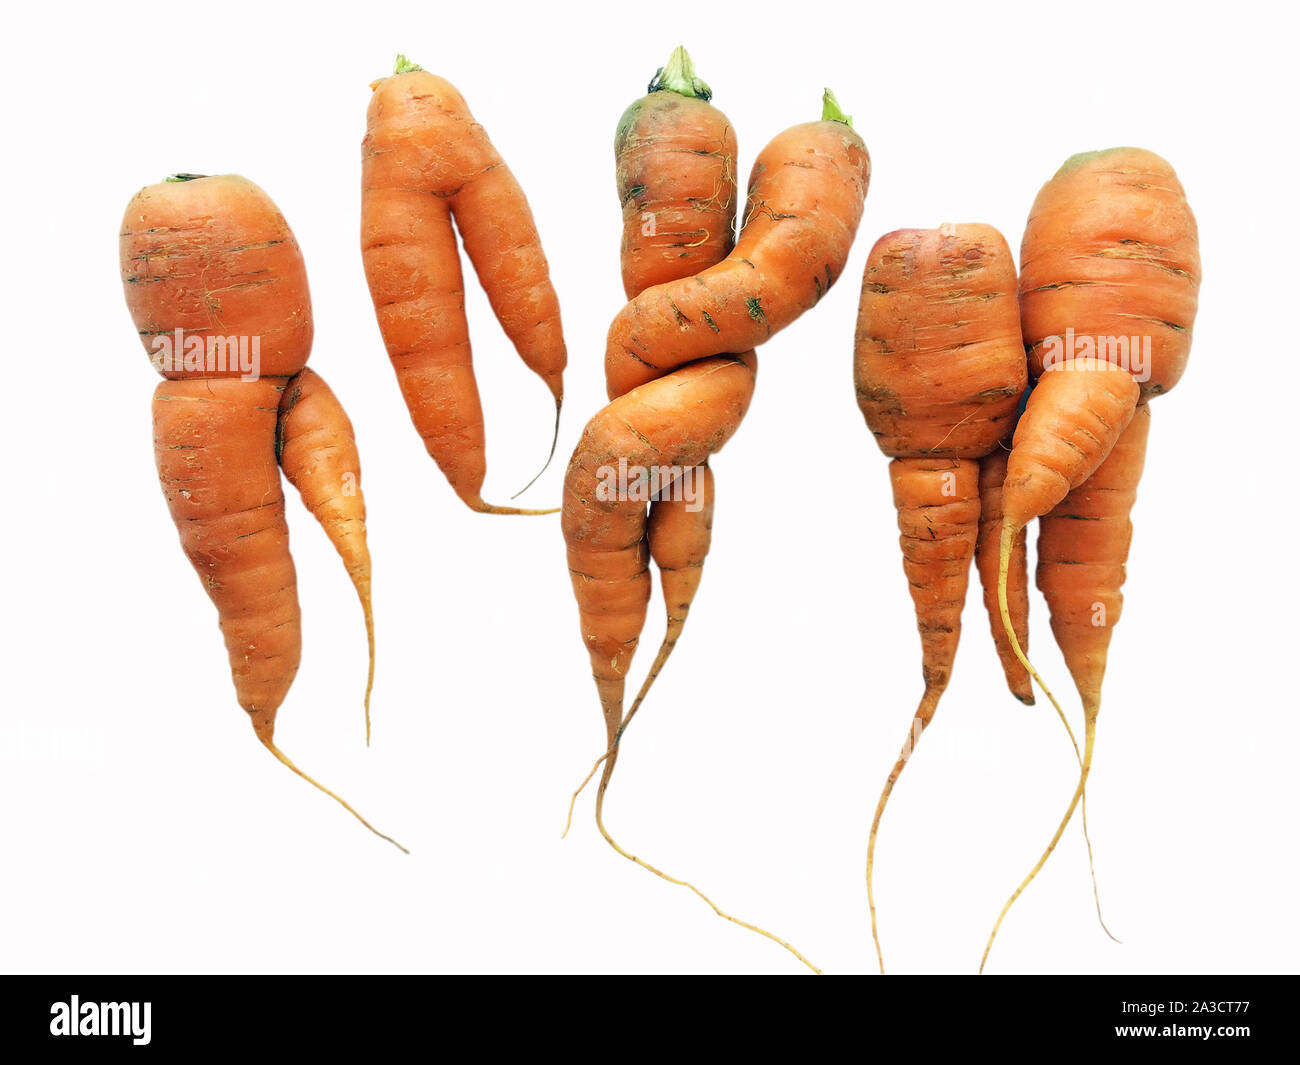 Odd shaped carrots isolated on white Stock Photo